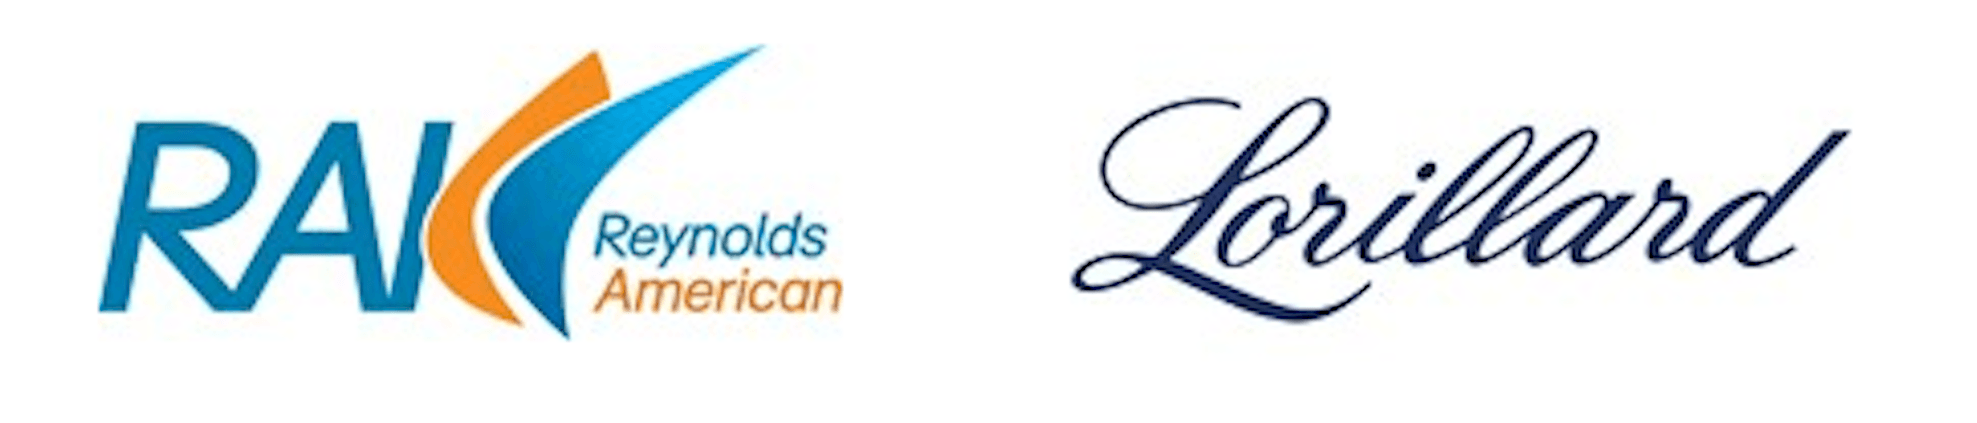 Reynolds American Logo - Reynolds American To Acquire Lorillard In $27B Deal